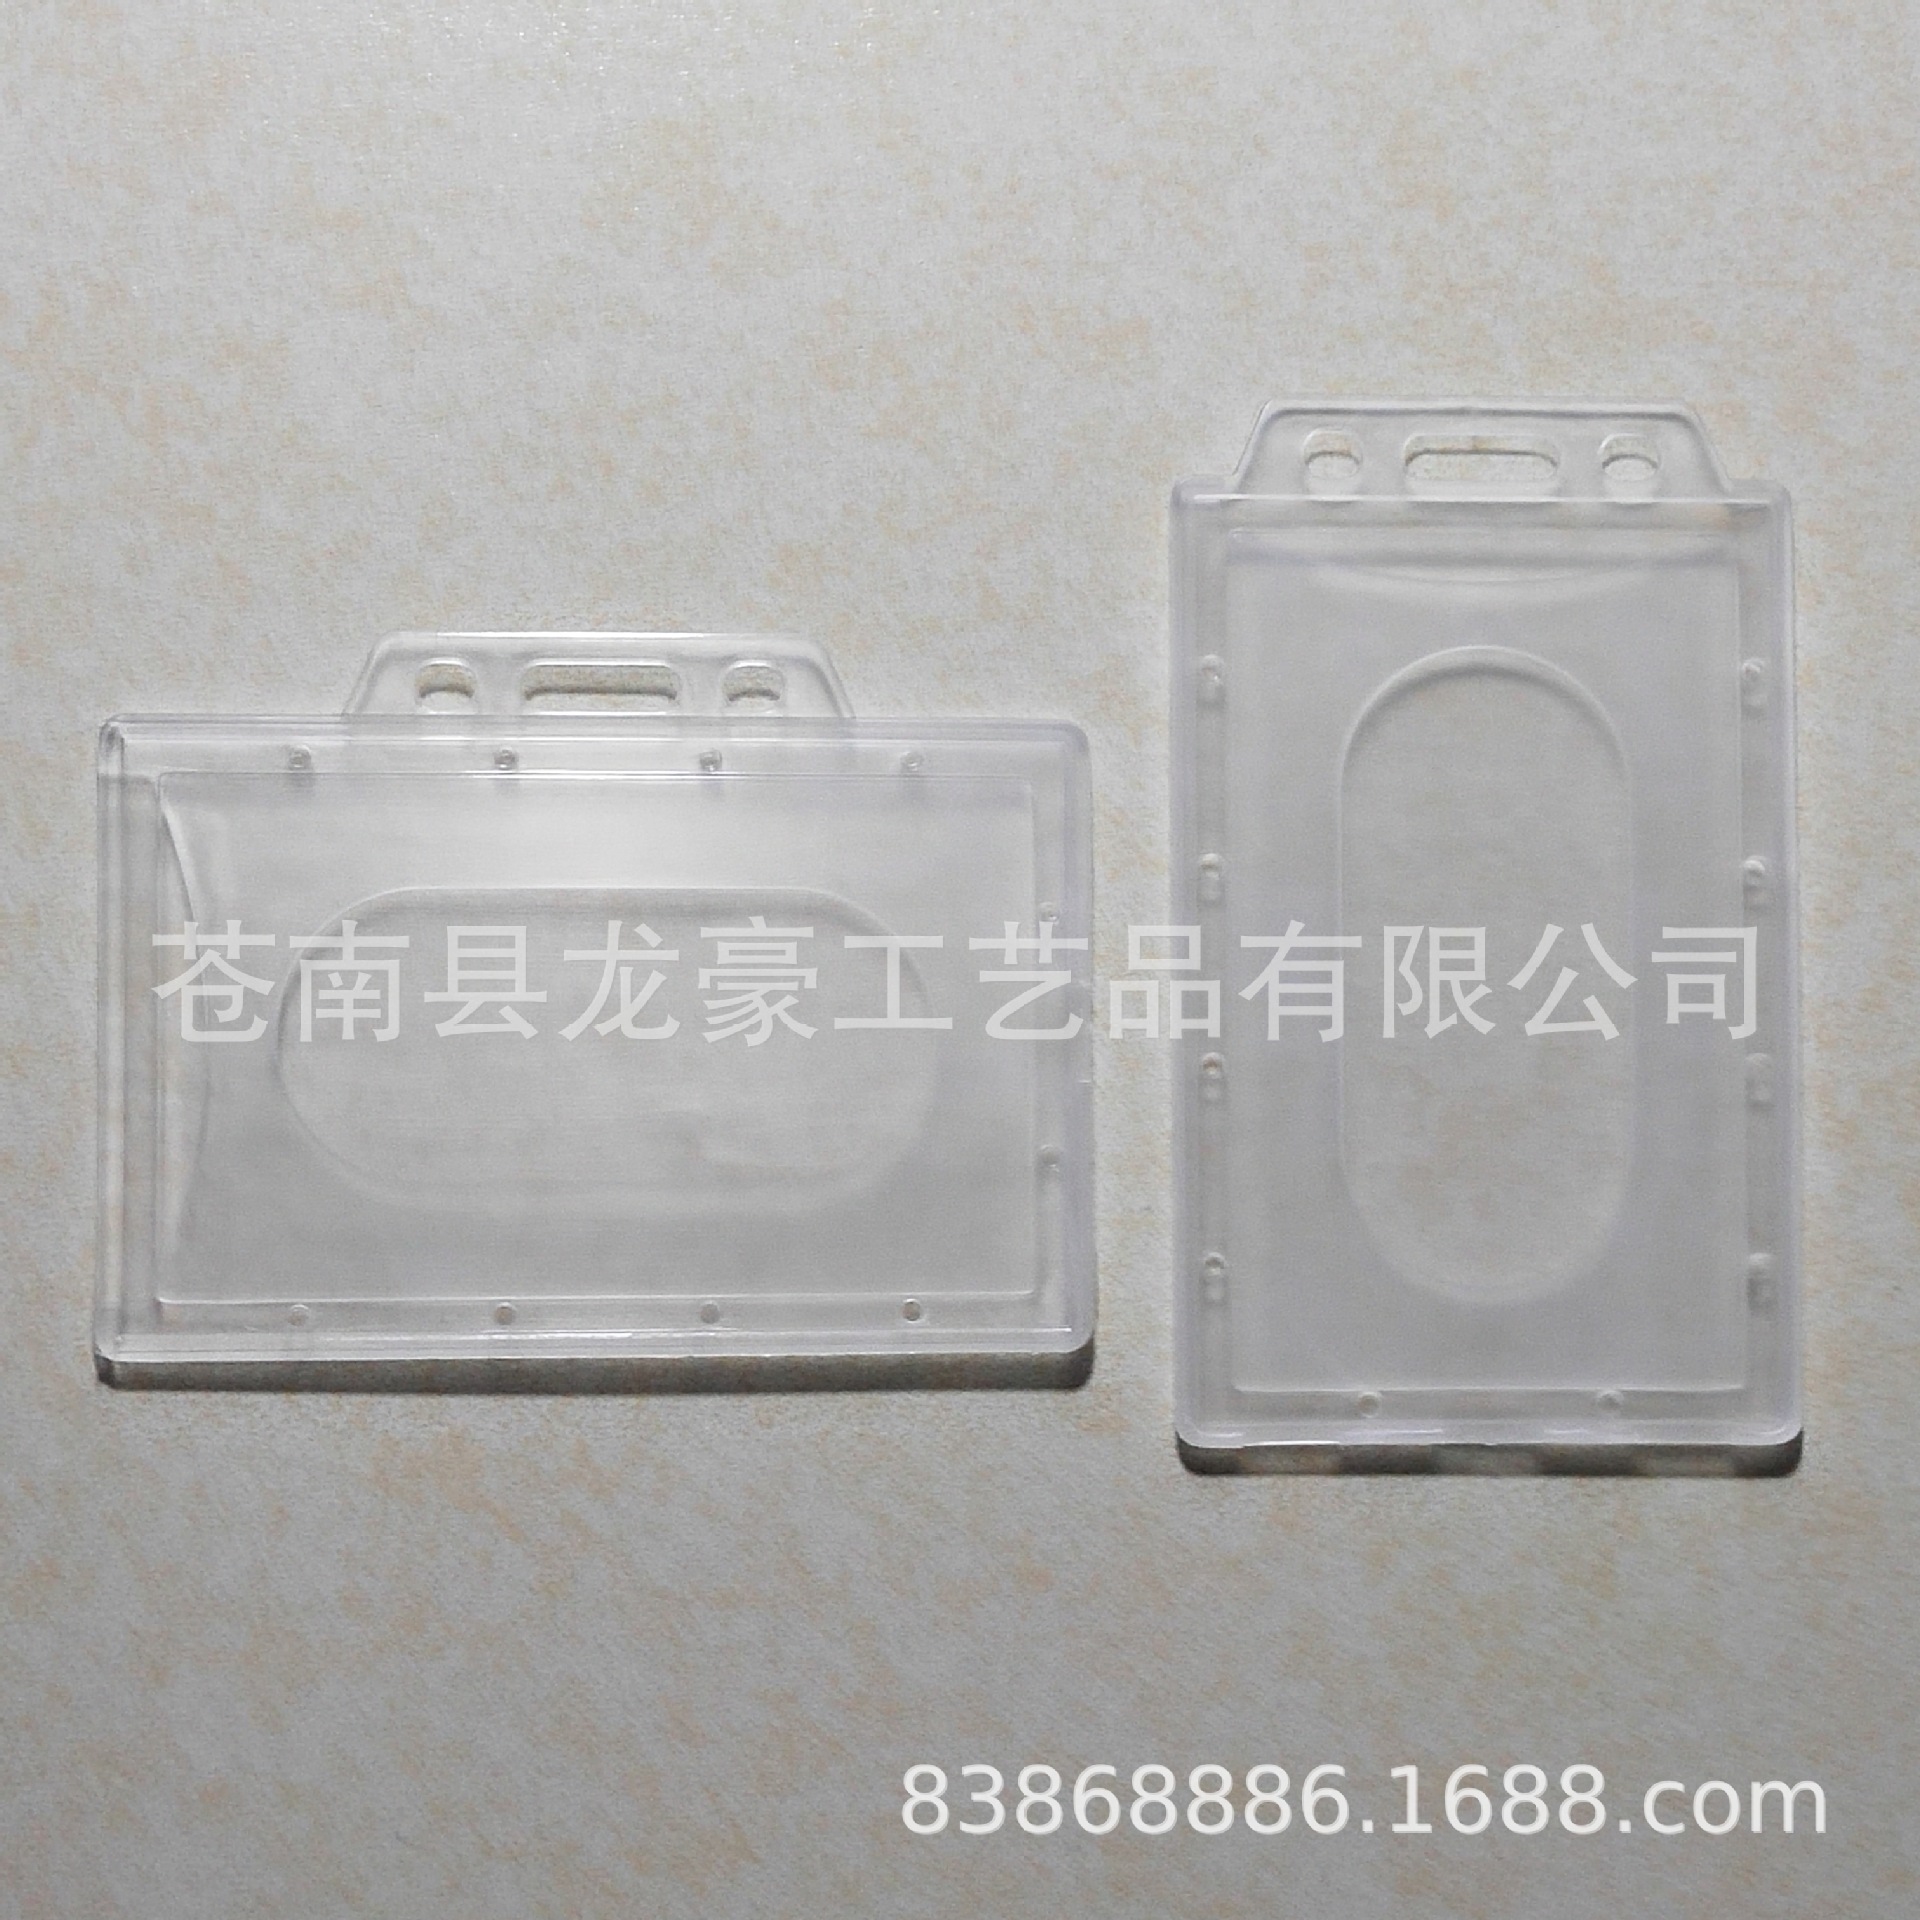 supply PP Hard card sets Hard plastic card sets Side insert ferrule PP Certificate badge jacket environmental protection PP Ferrule